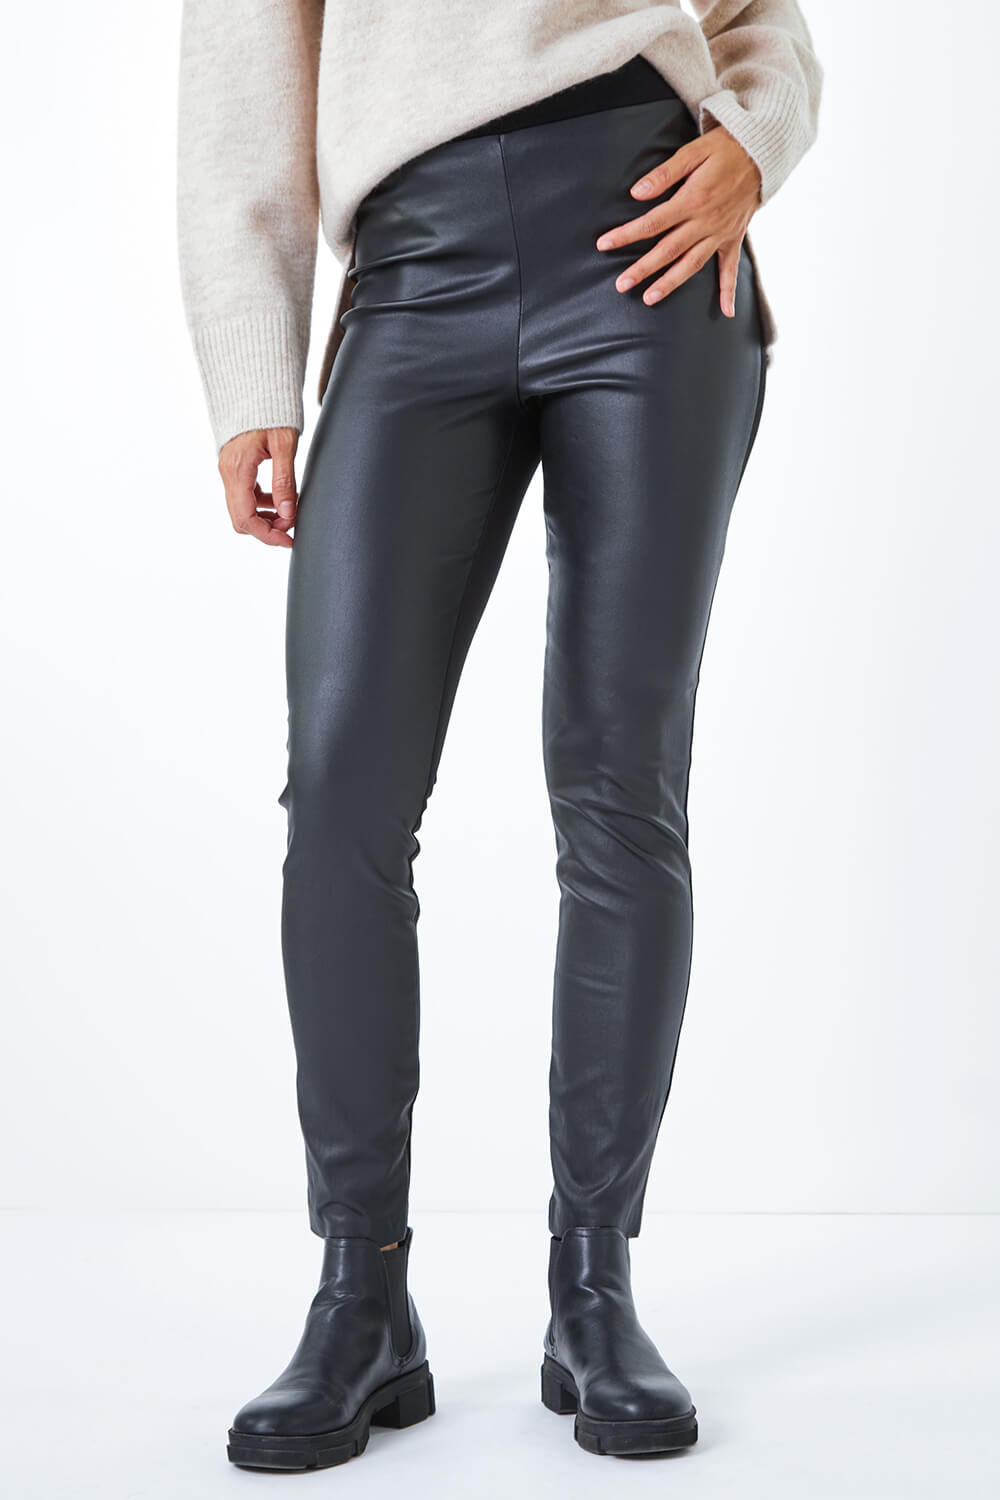 Cabi Bexley Black Faux Leather Panel Stretch Leggings Size Small Women's  J60 | eBay